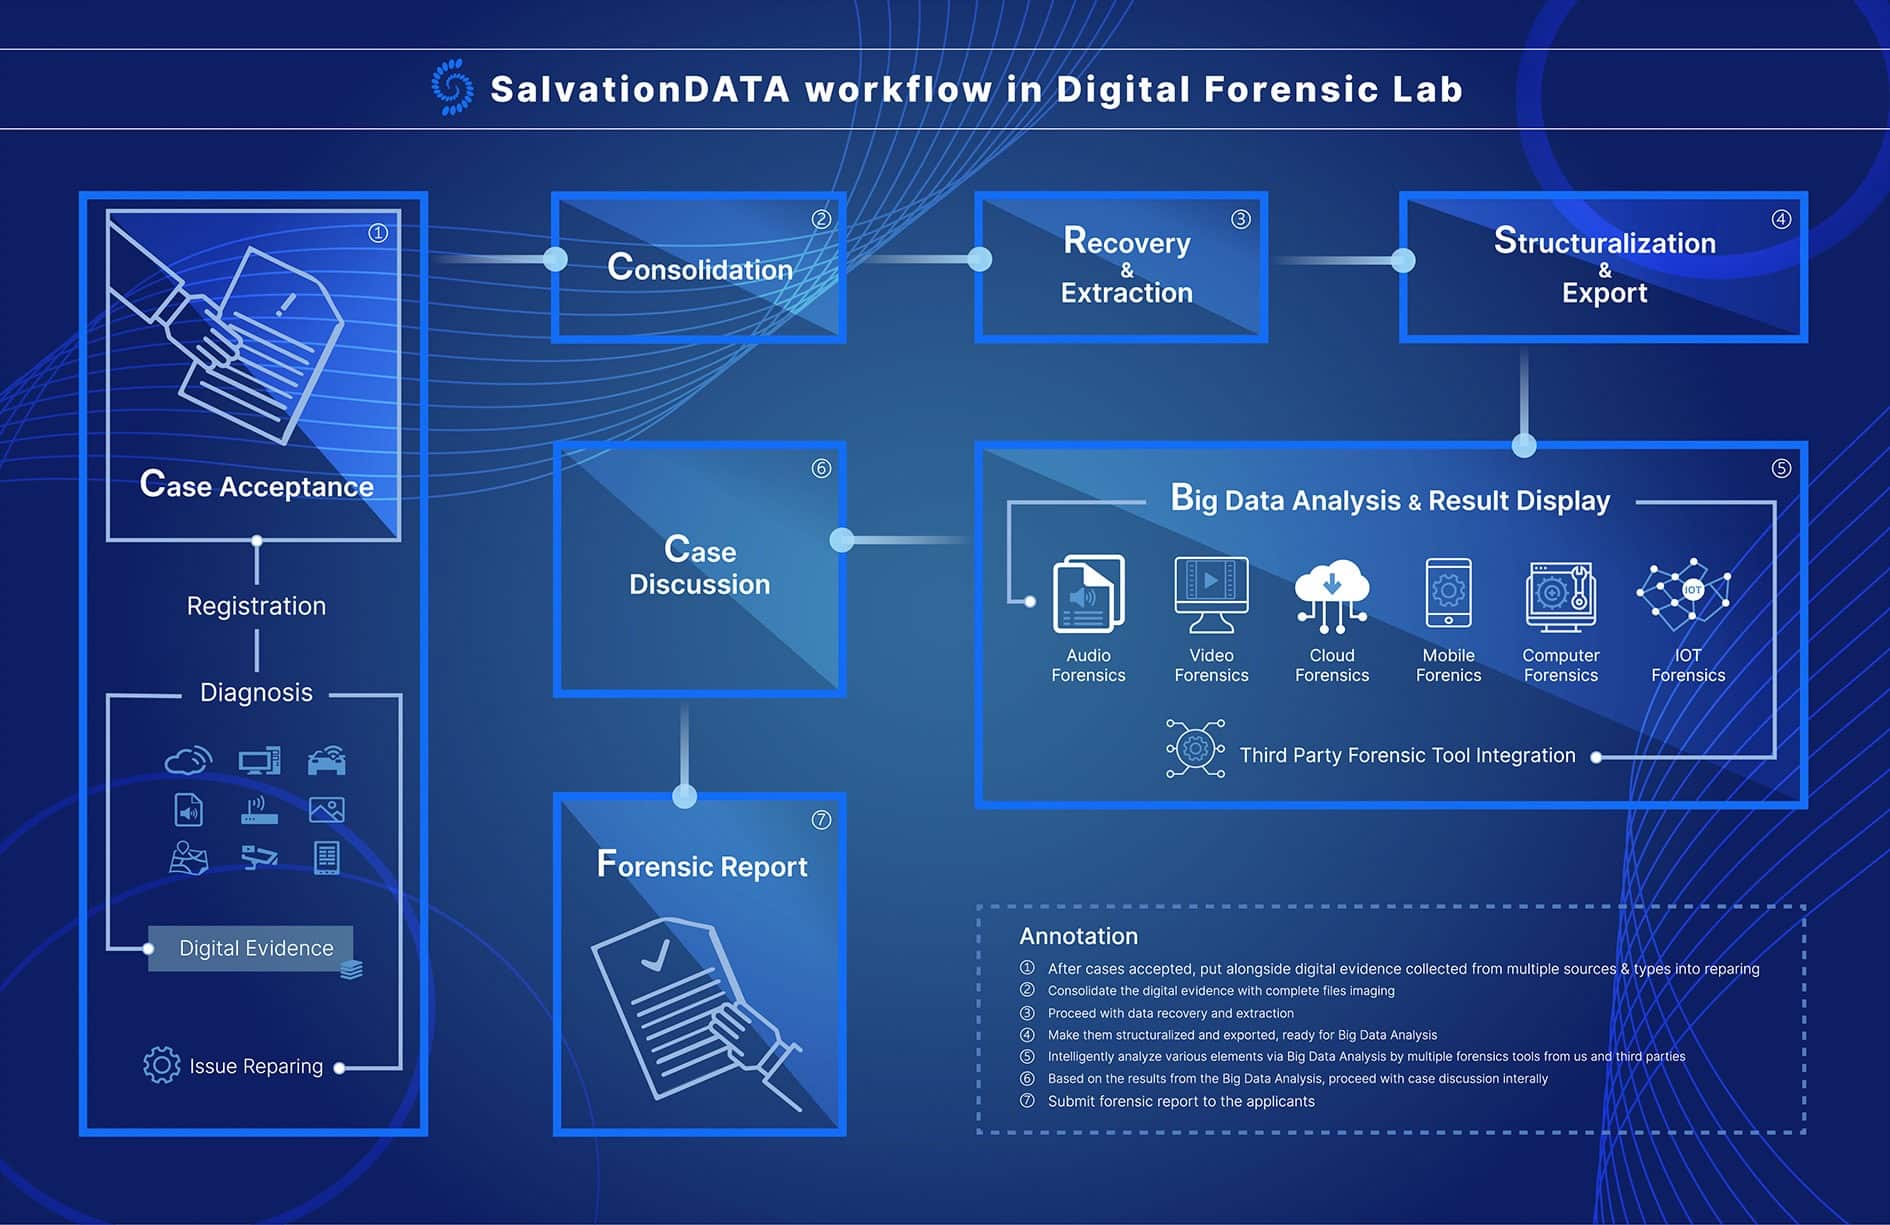 Workflow of salvationdata digital forensic lab